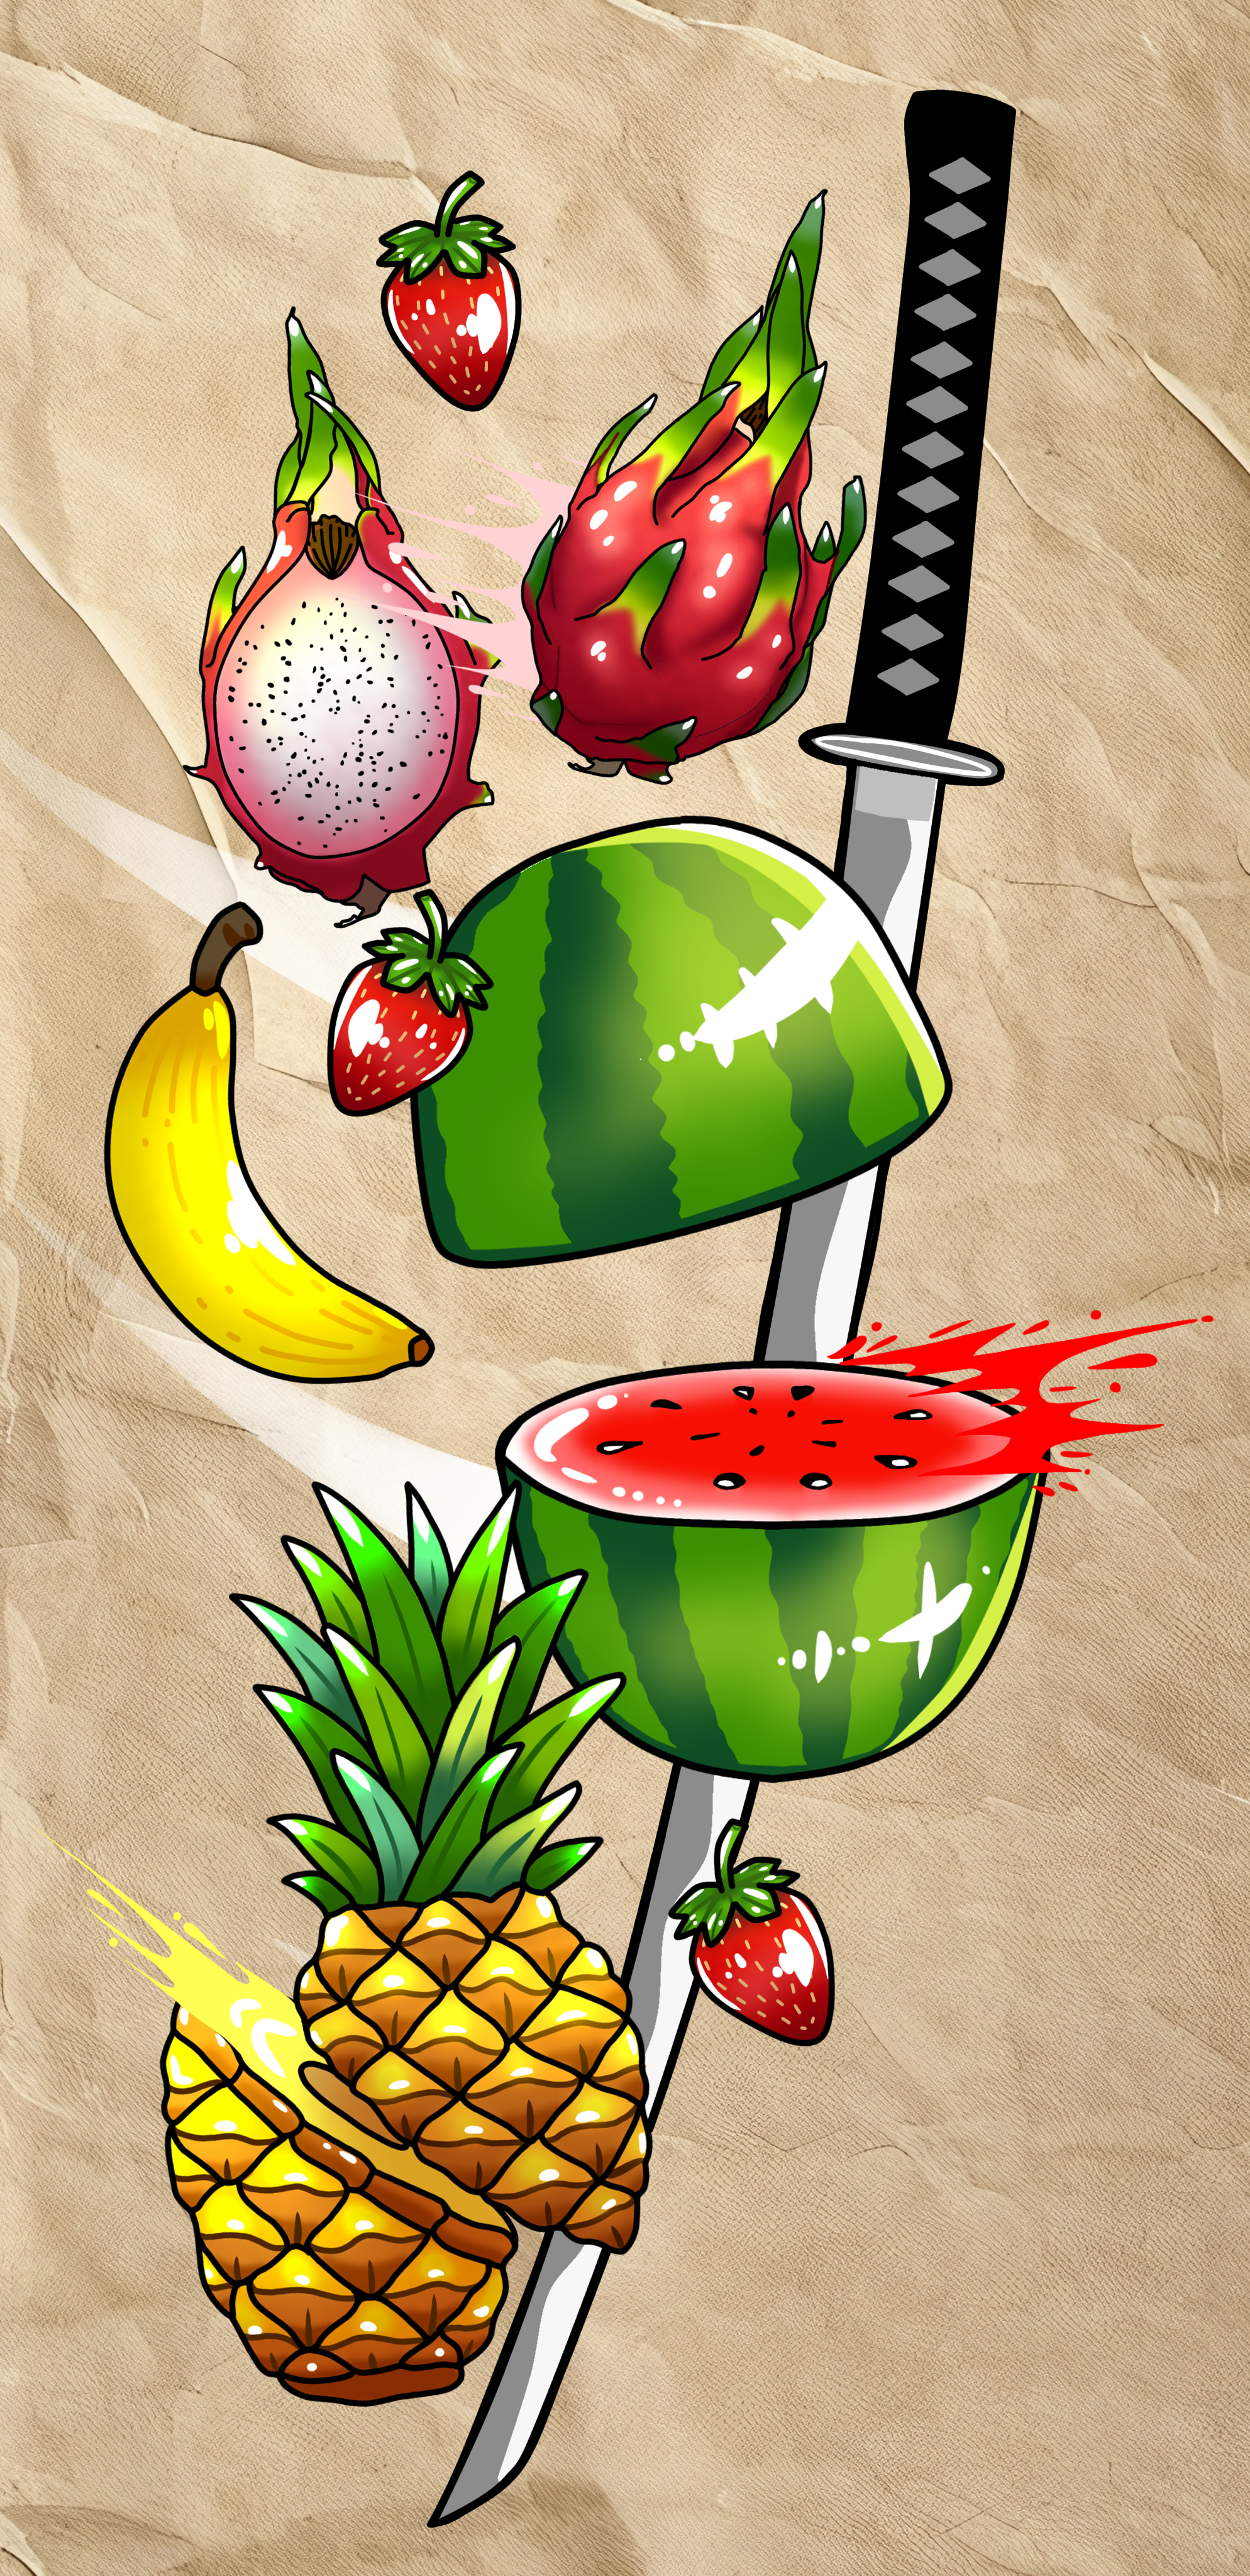 Fruit Ninja by advenablack on DeviantArt